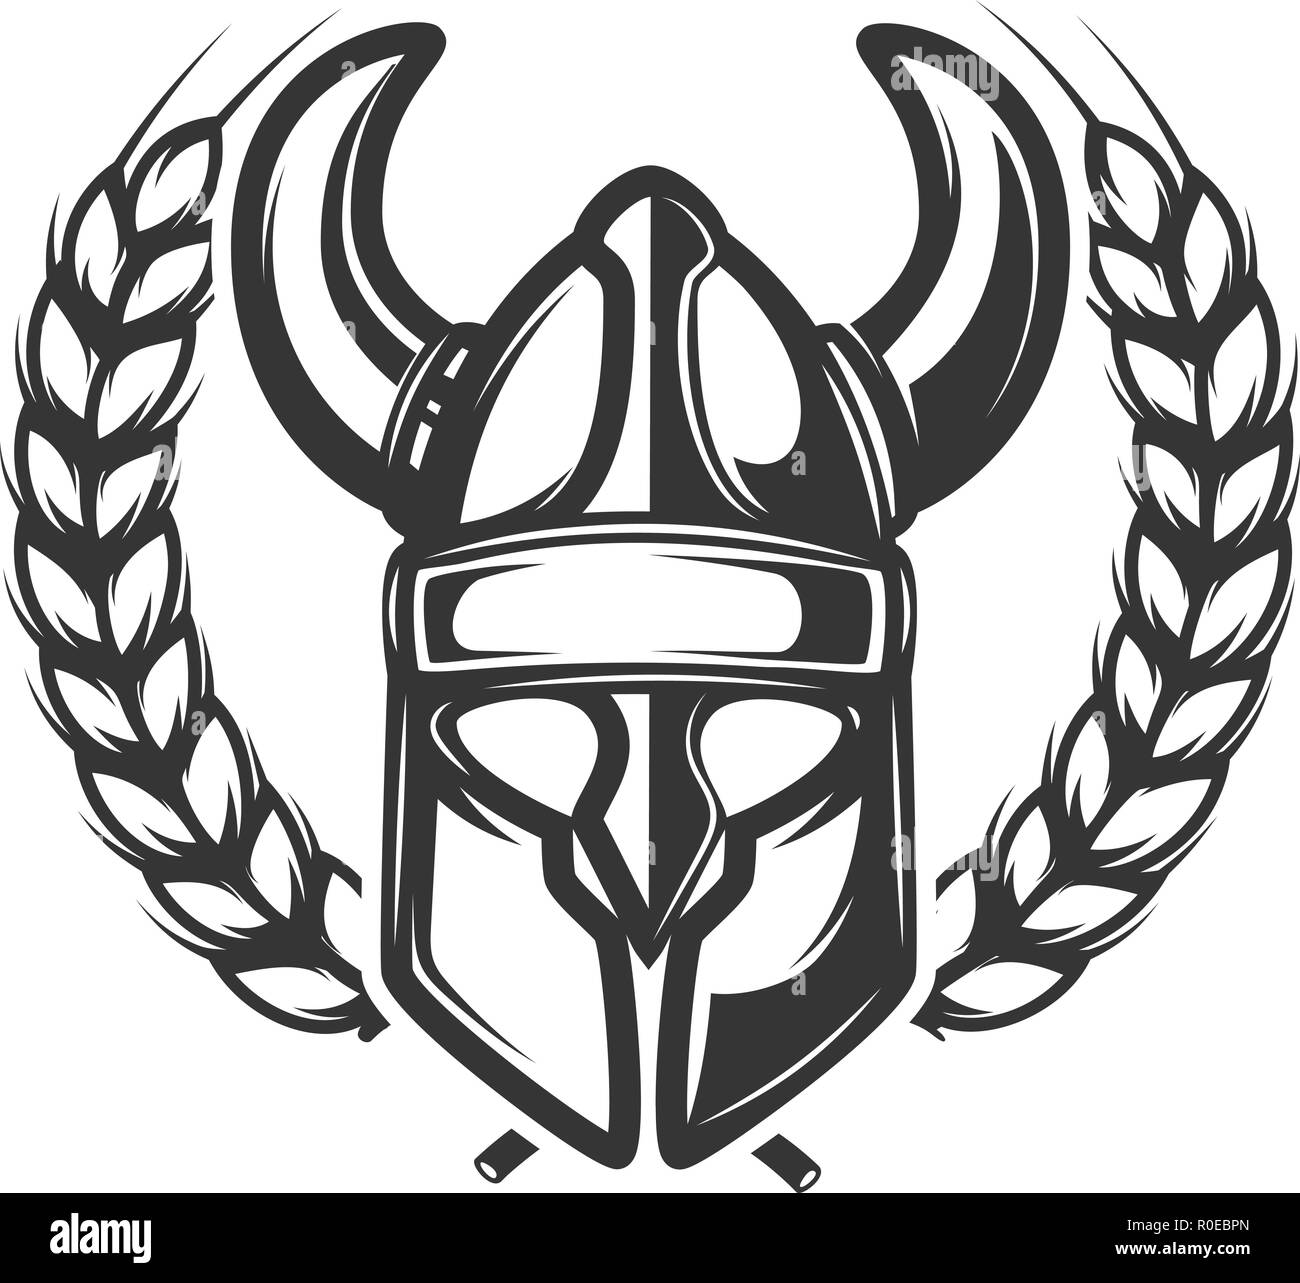 Emblem Vorlage mit Kranz und Viking Helm. Design Element für Logo, Label, Emblem, sign. Vector Illustration Stock Vektor